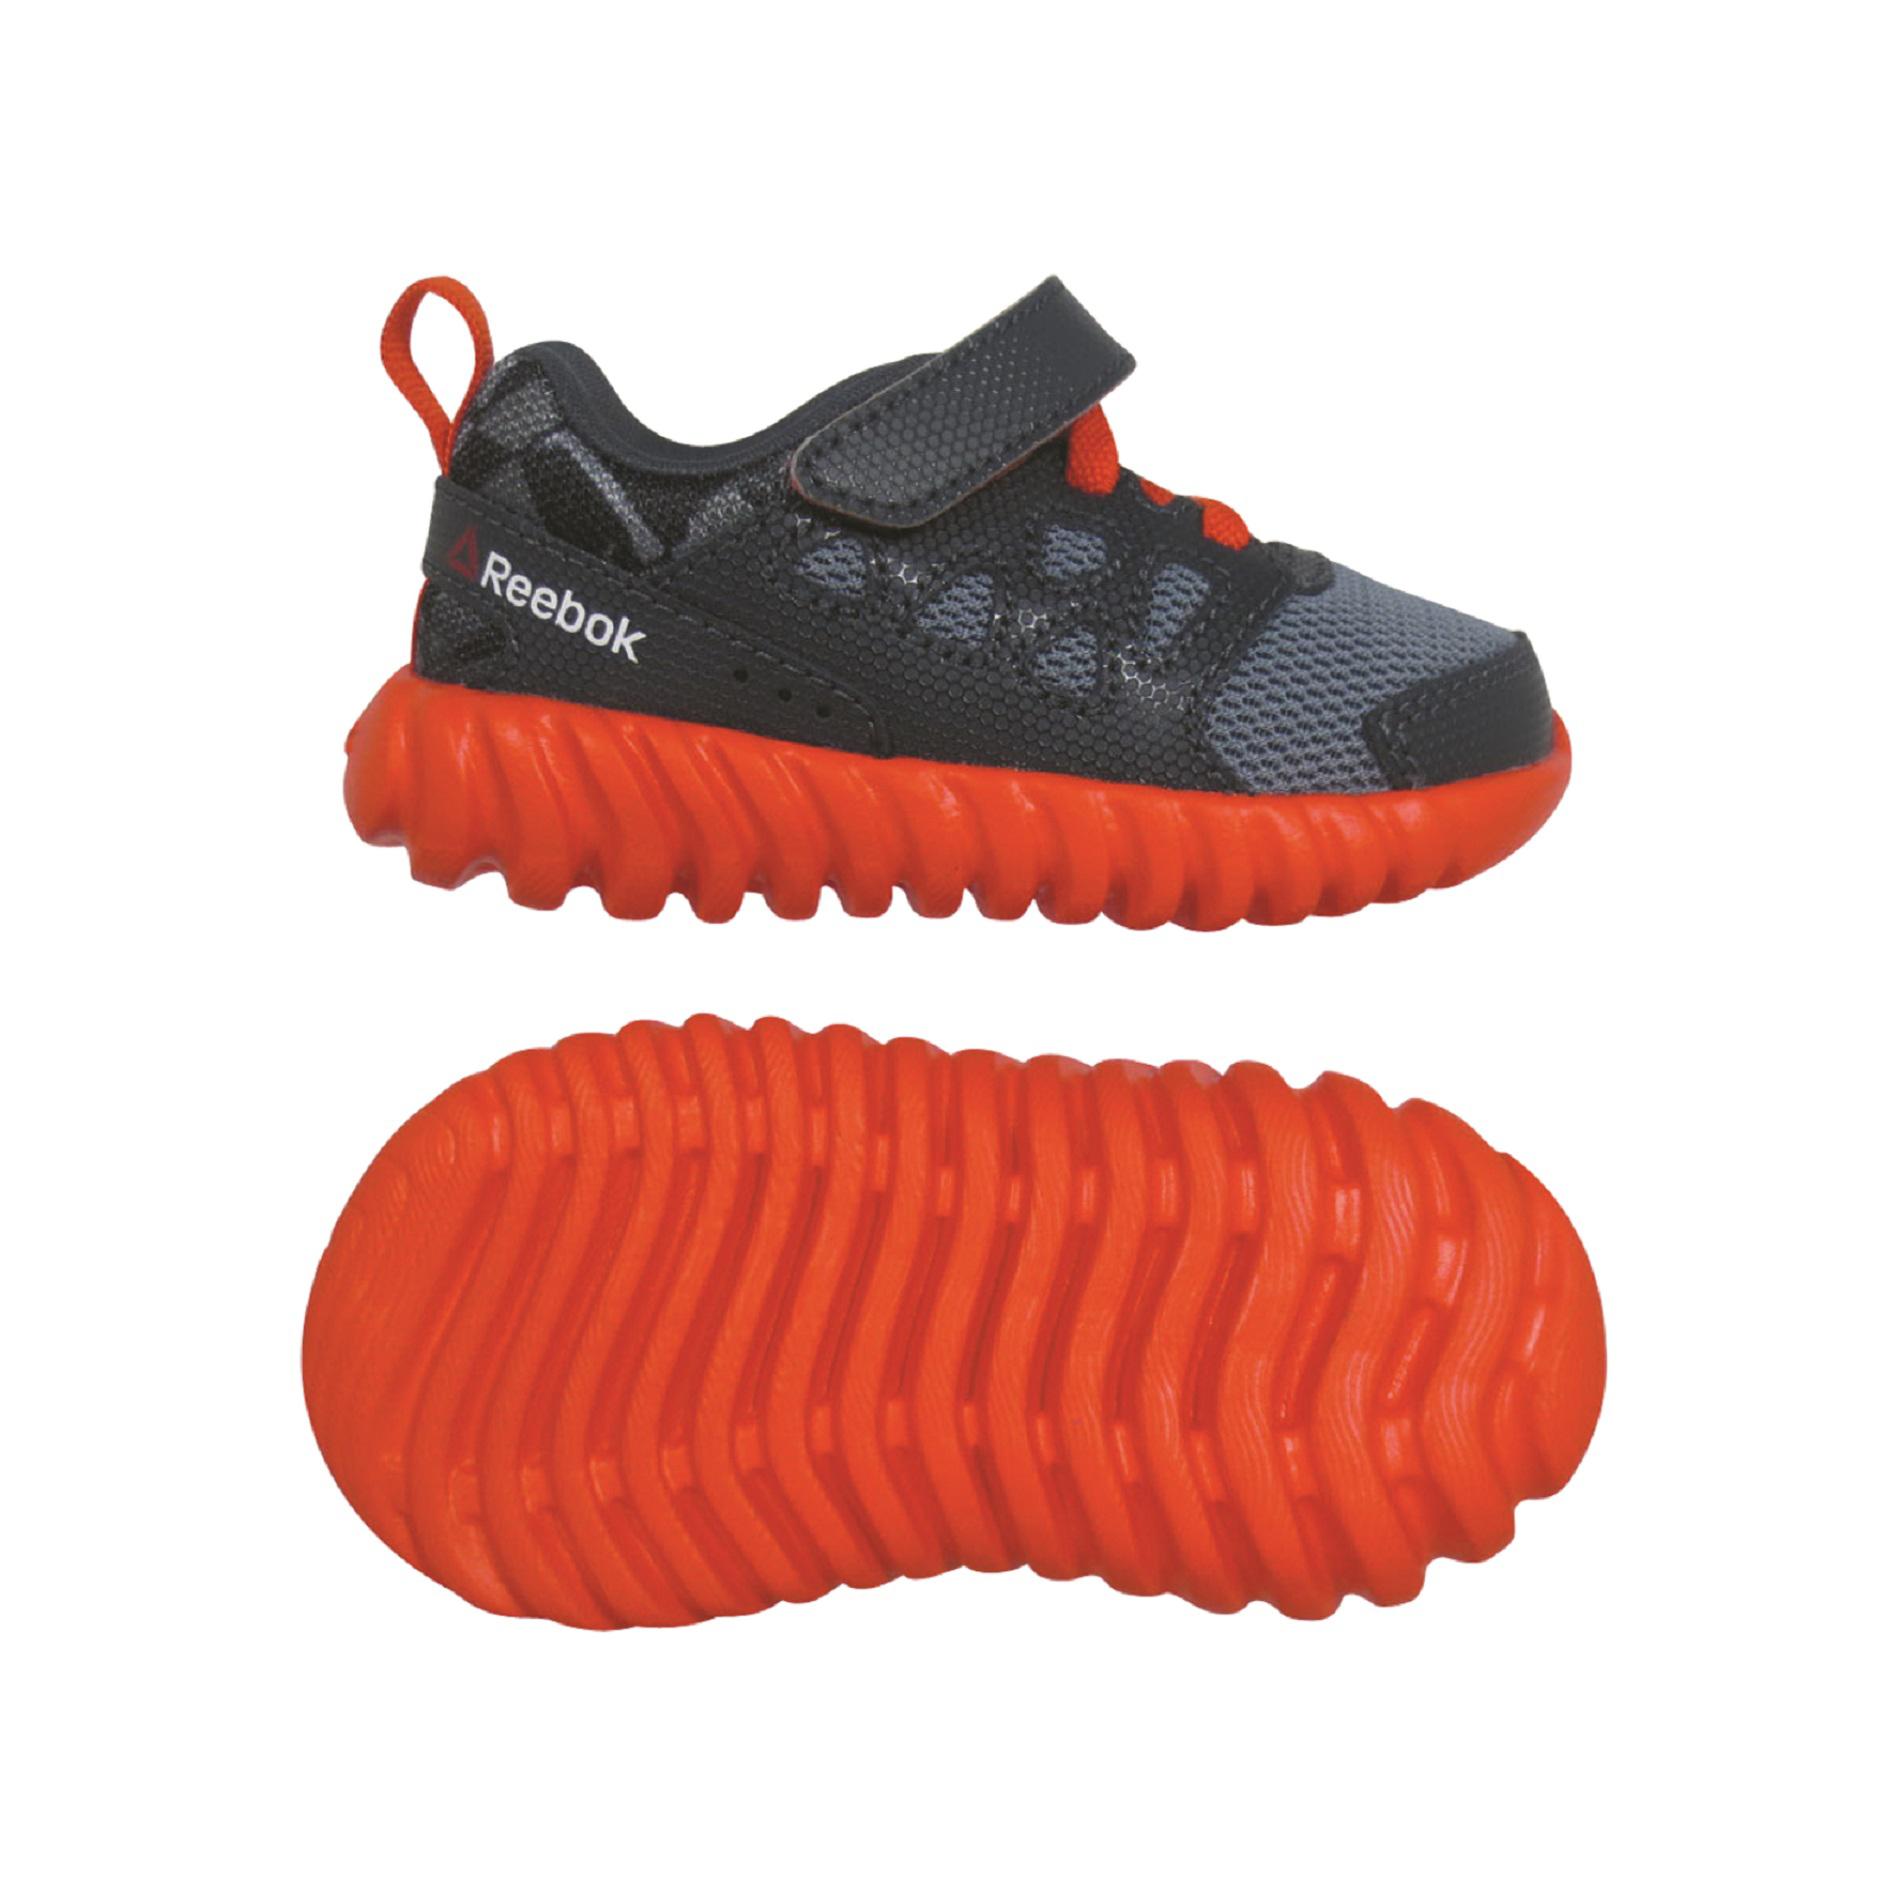 Reebok Toddler Boy's TwistForm Blaze 2.0 Blue/Orange Athletic Shoe